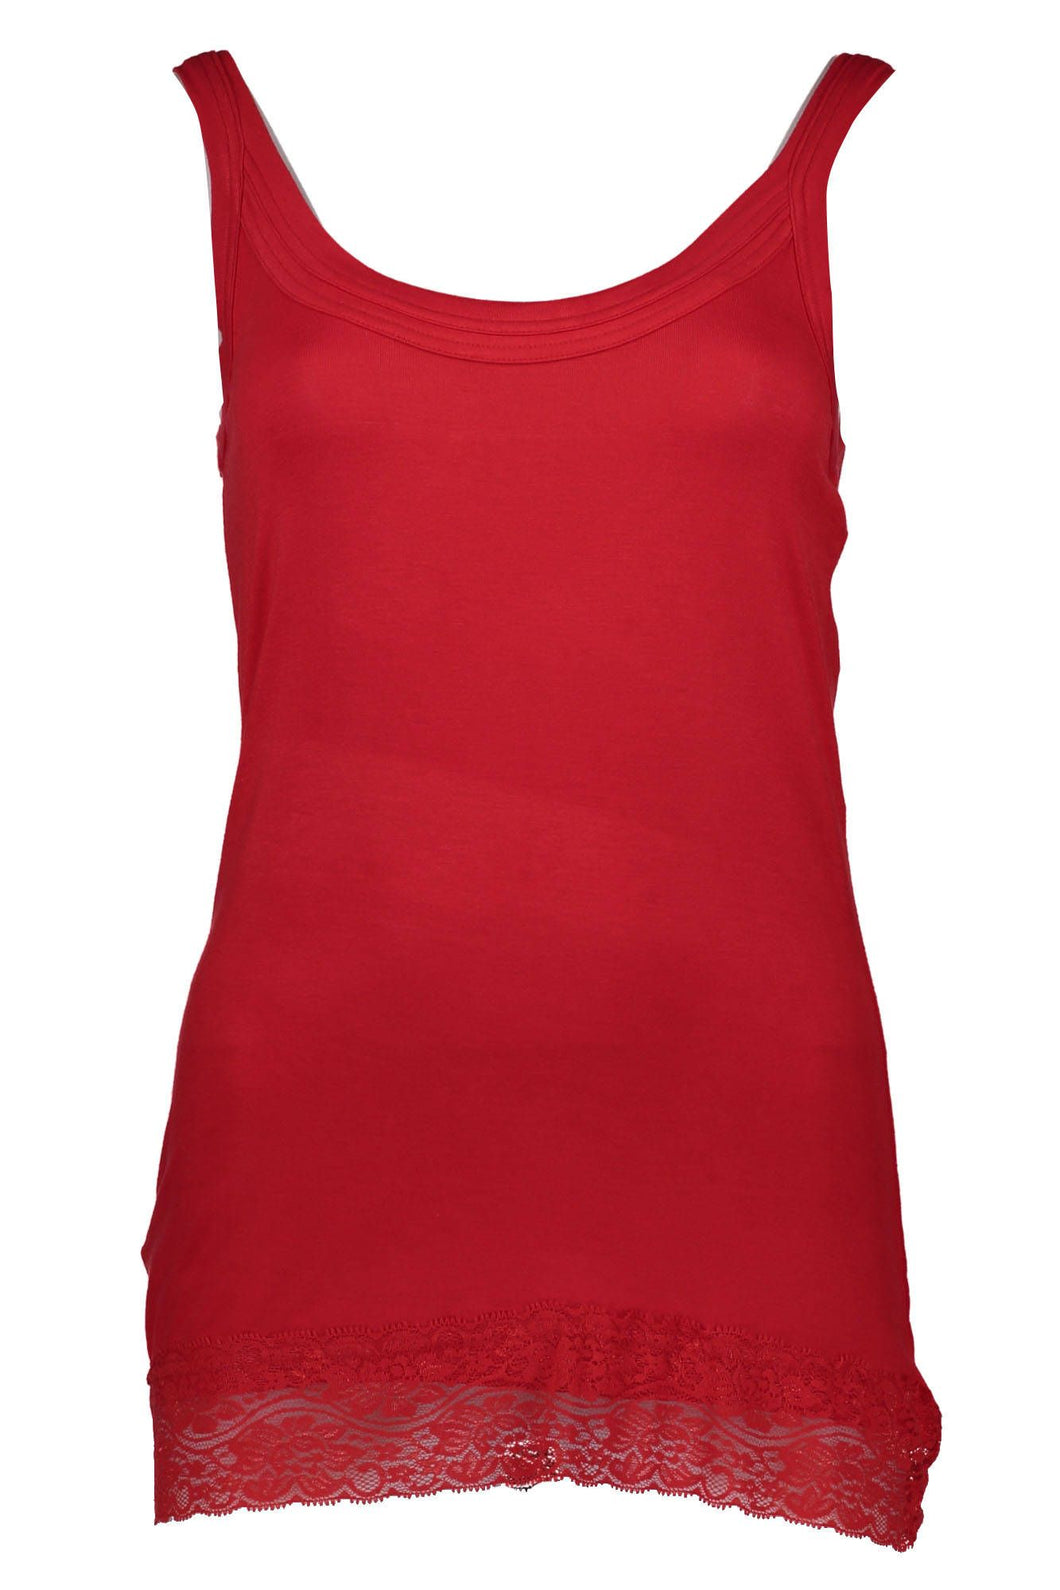 Silvian Heach Red Cotton Tops & T-Shirt